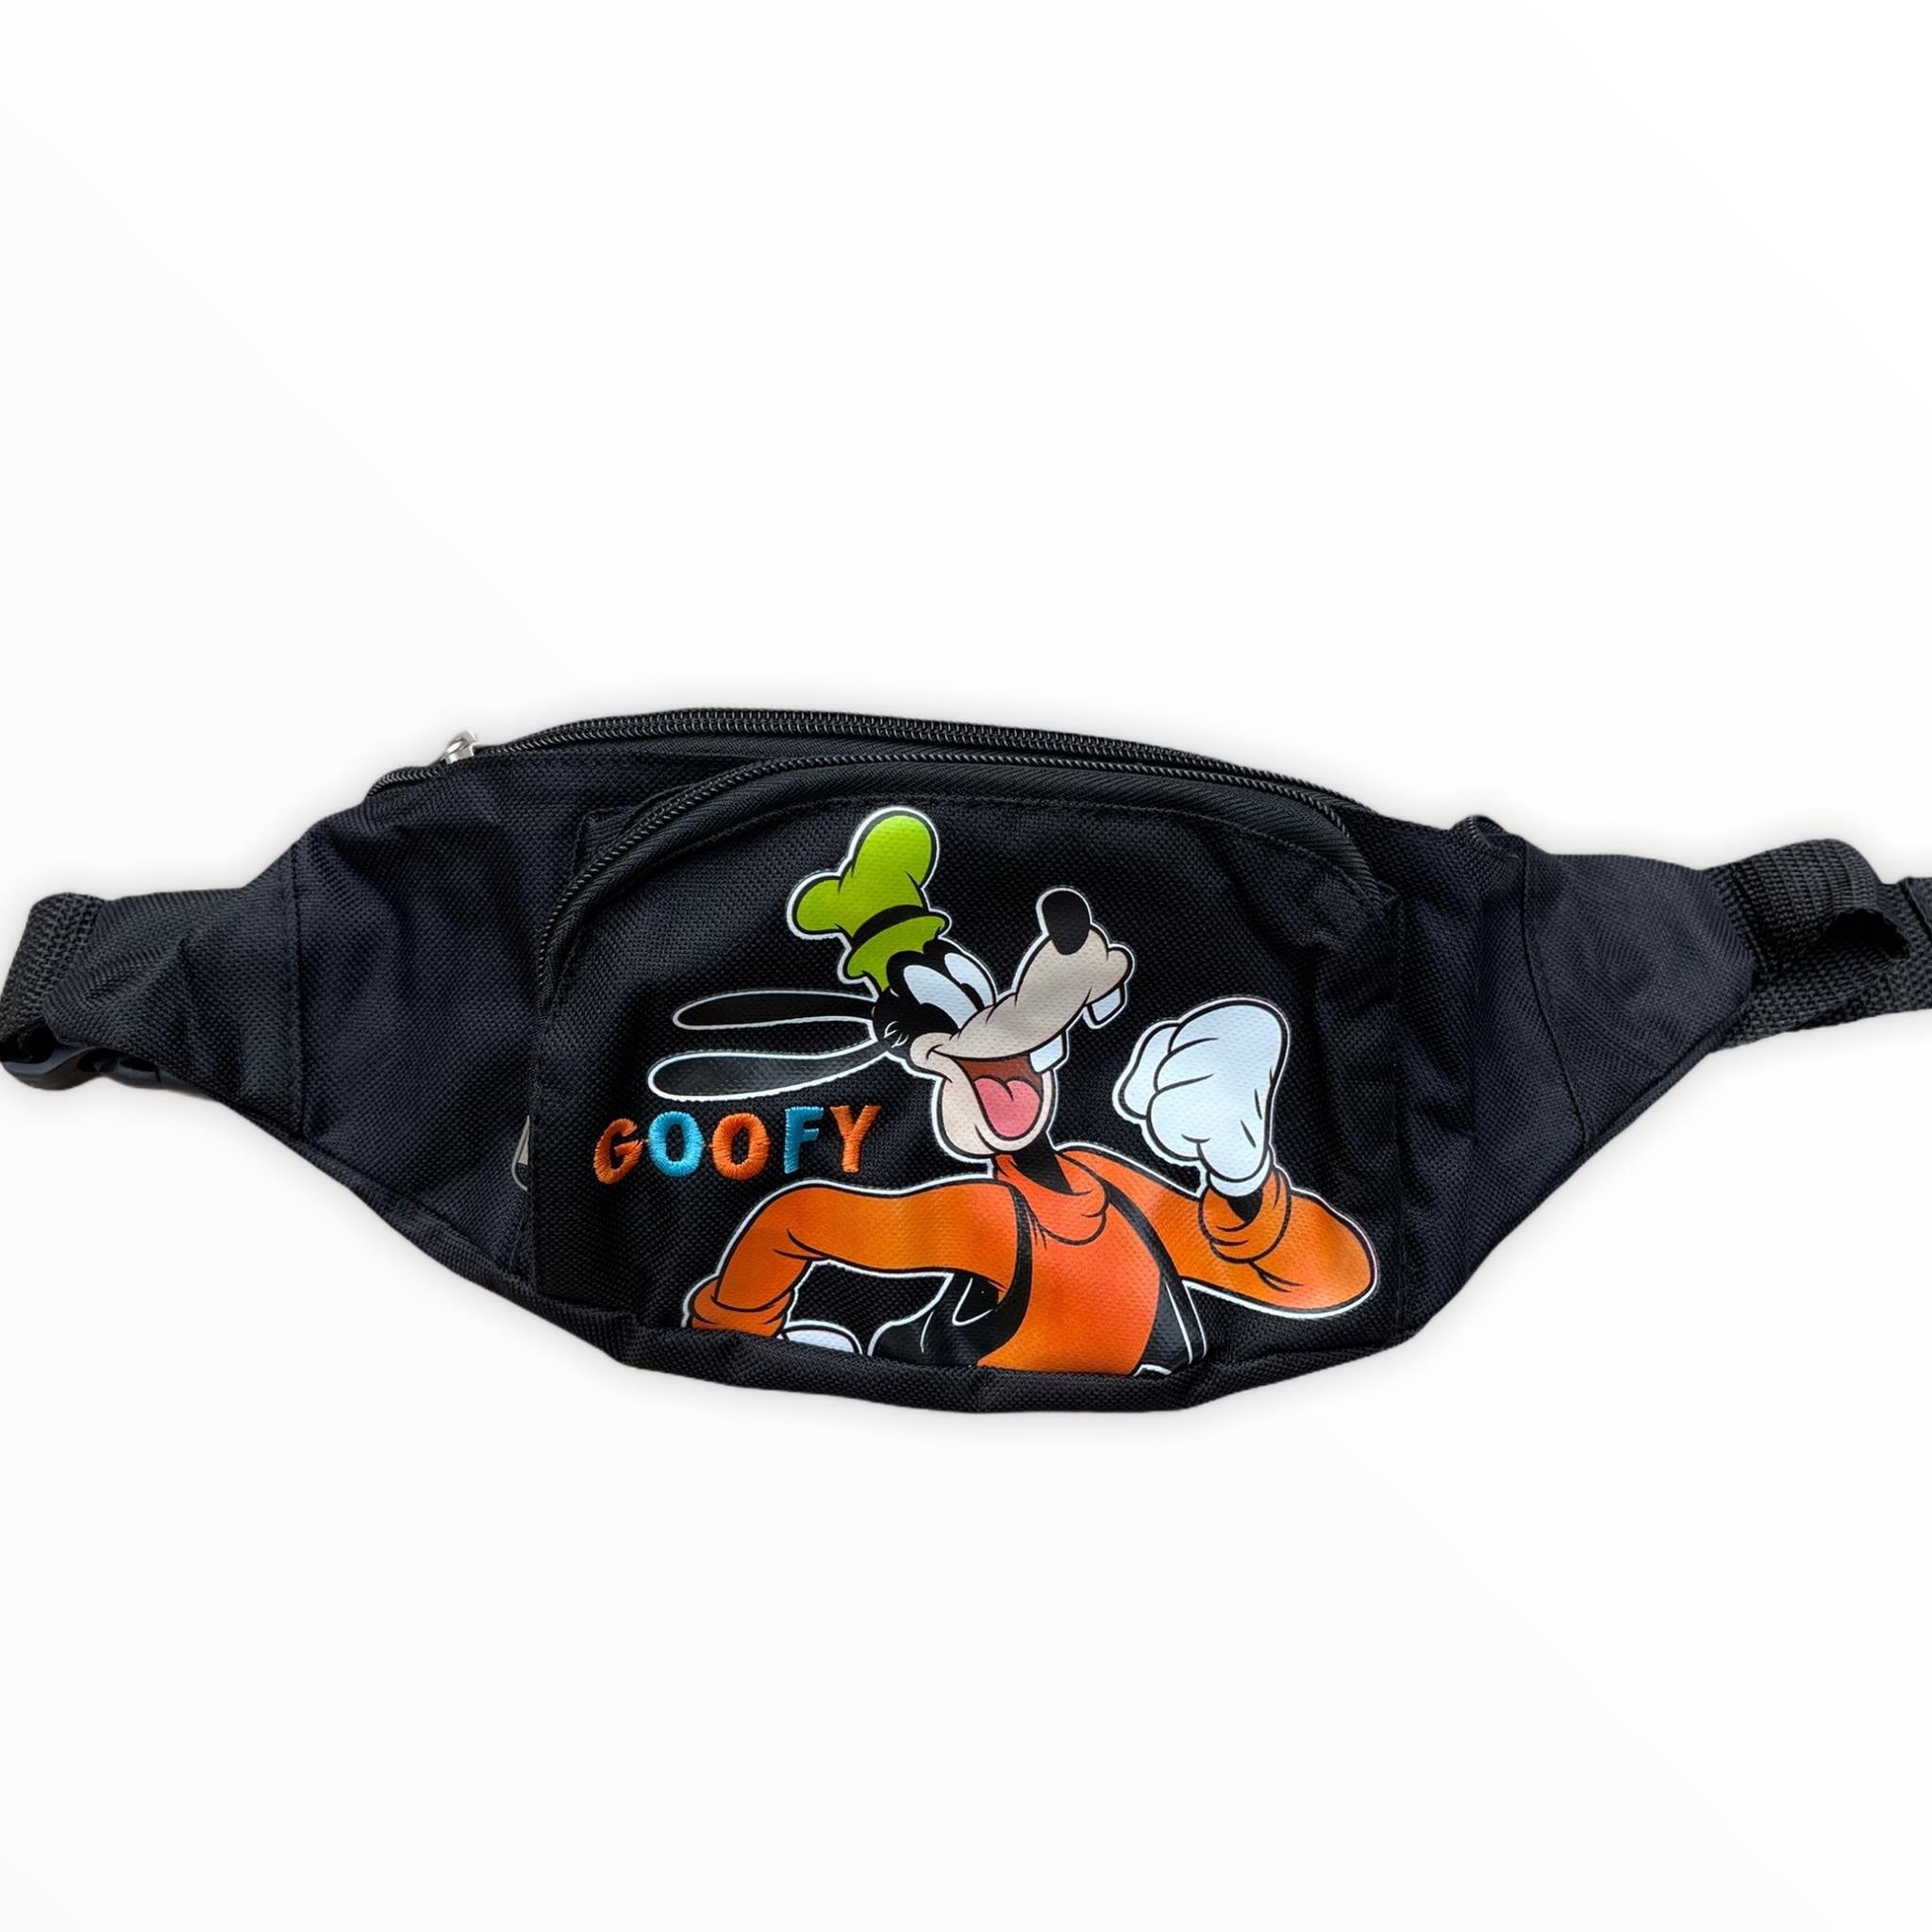 Disney Goofy Black Belt Bag Fanny Pack